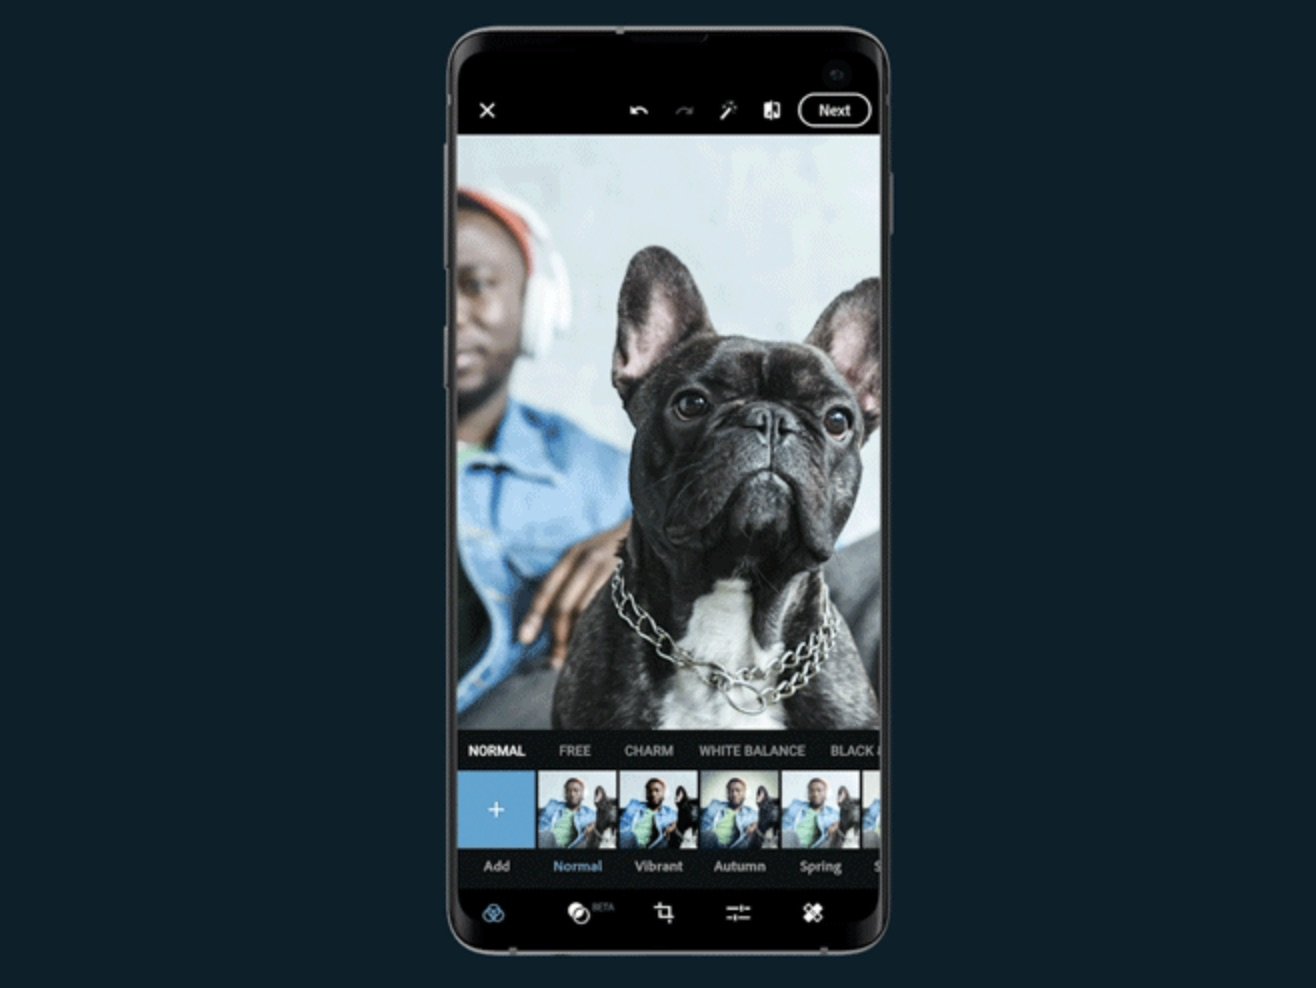 Aplicativo Photoshop Express está disponível gratuitamente para dispositivos Android e iOS.